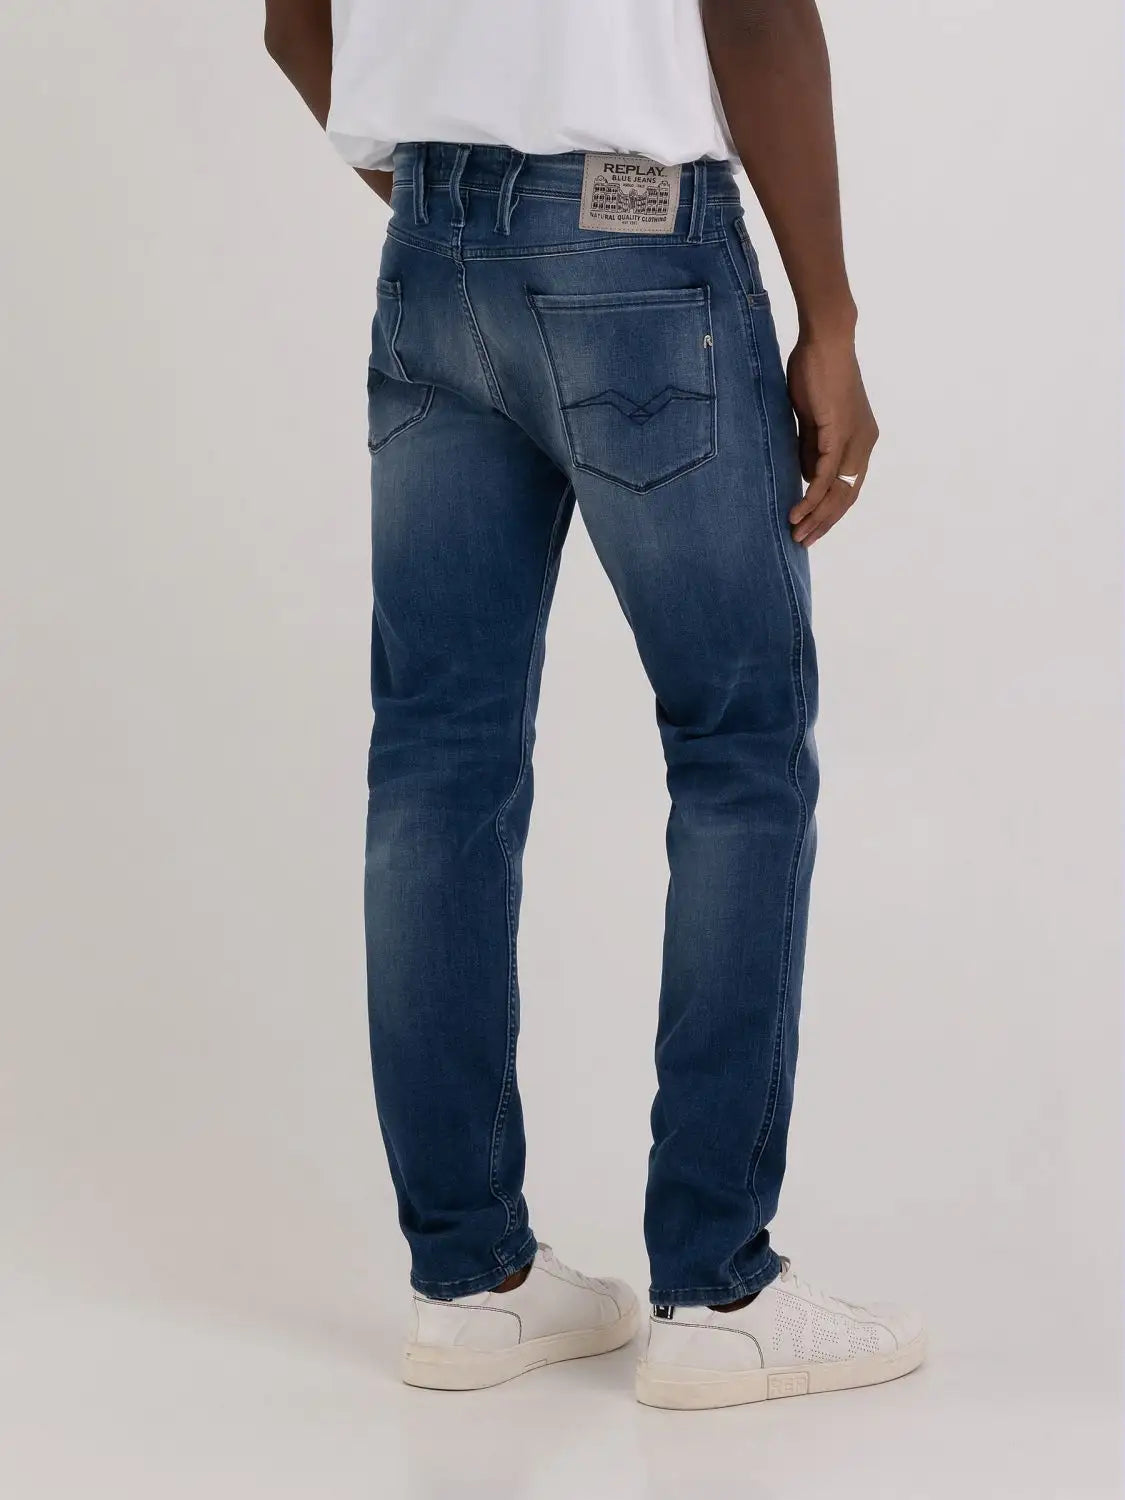 Replay Slim Fit Anbass Medium Dark Wash Jeans - M914Y .000.41A 400